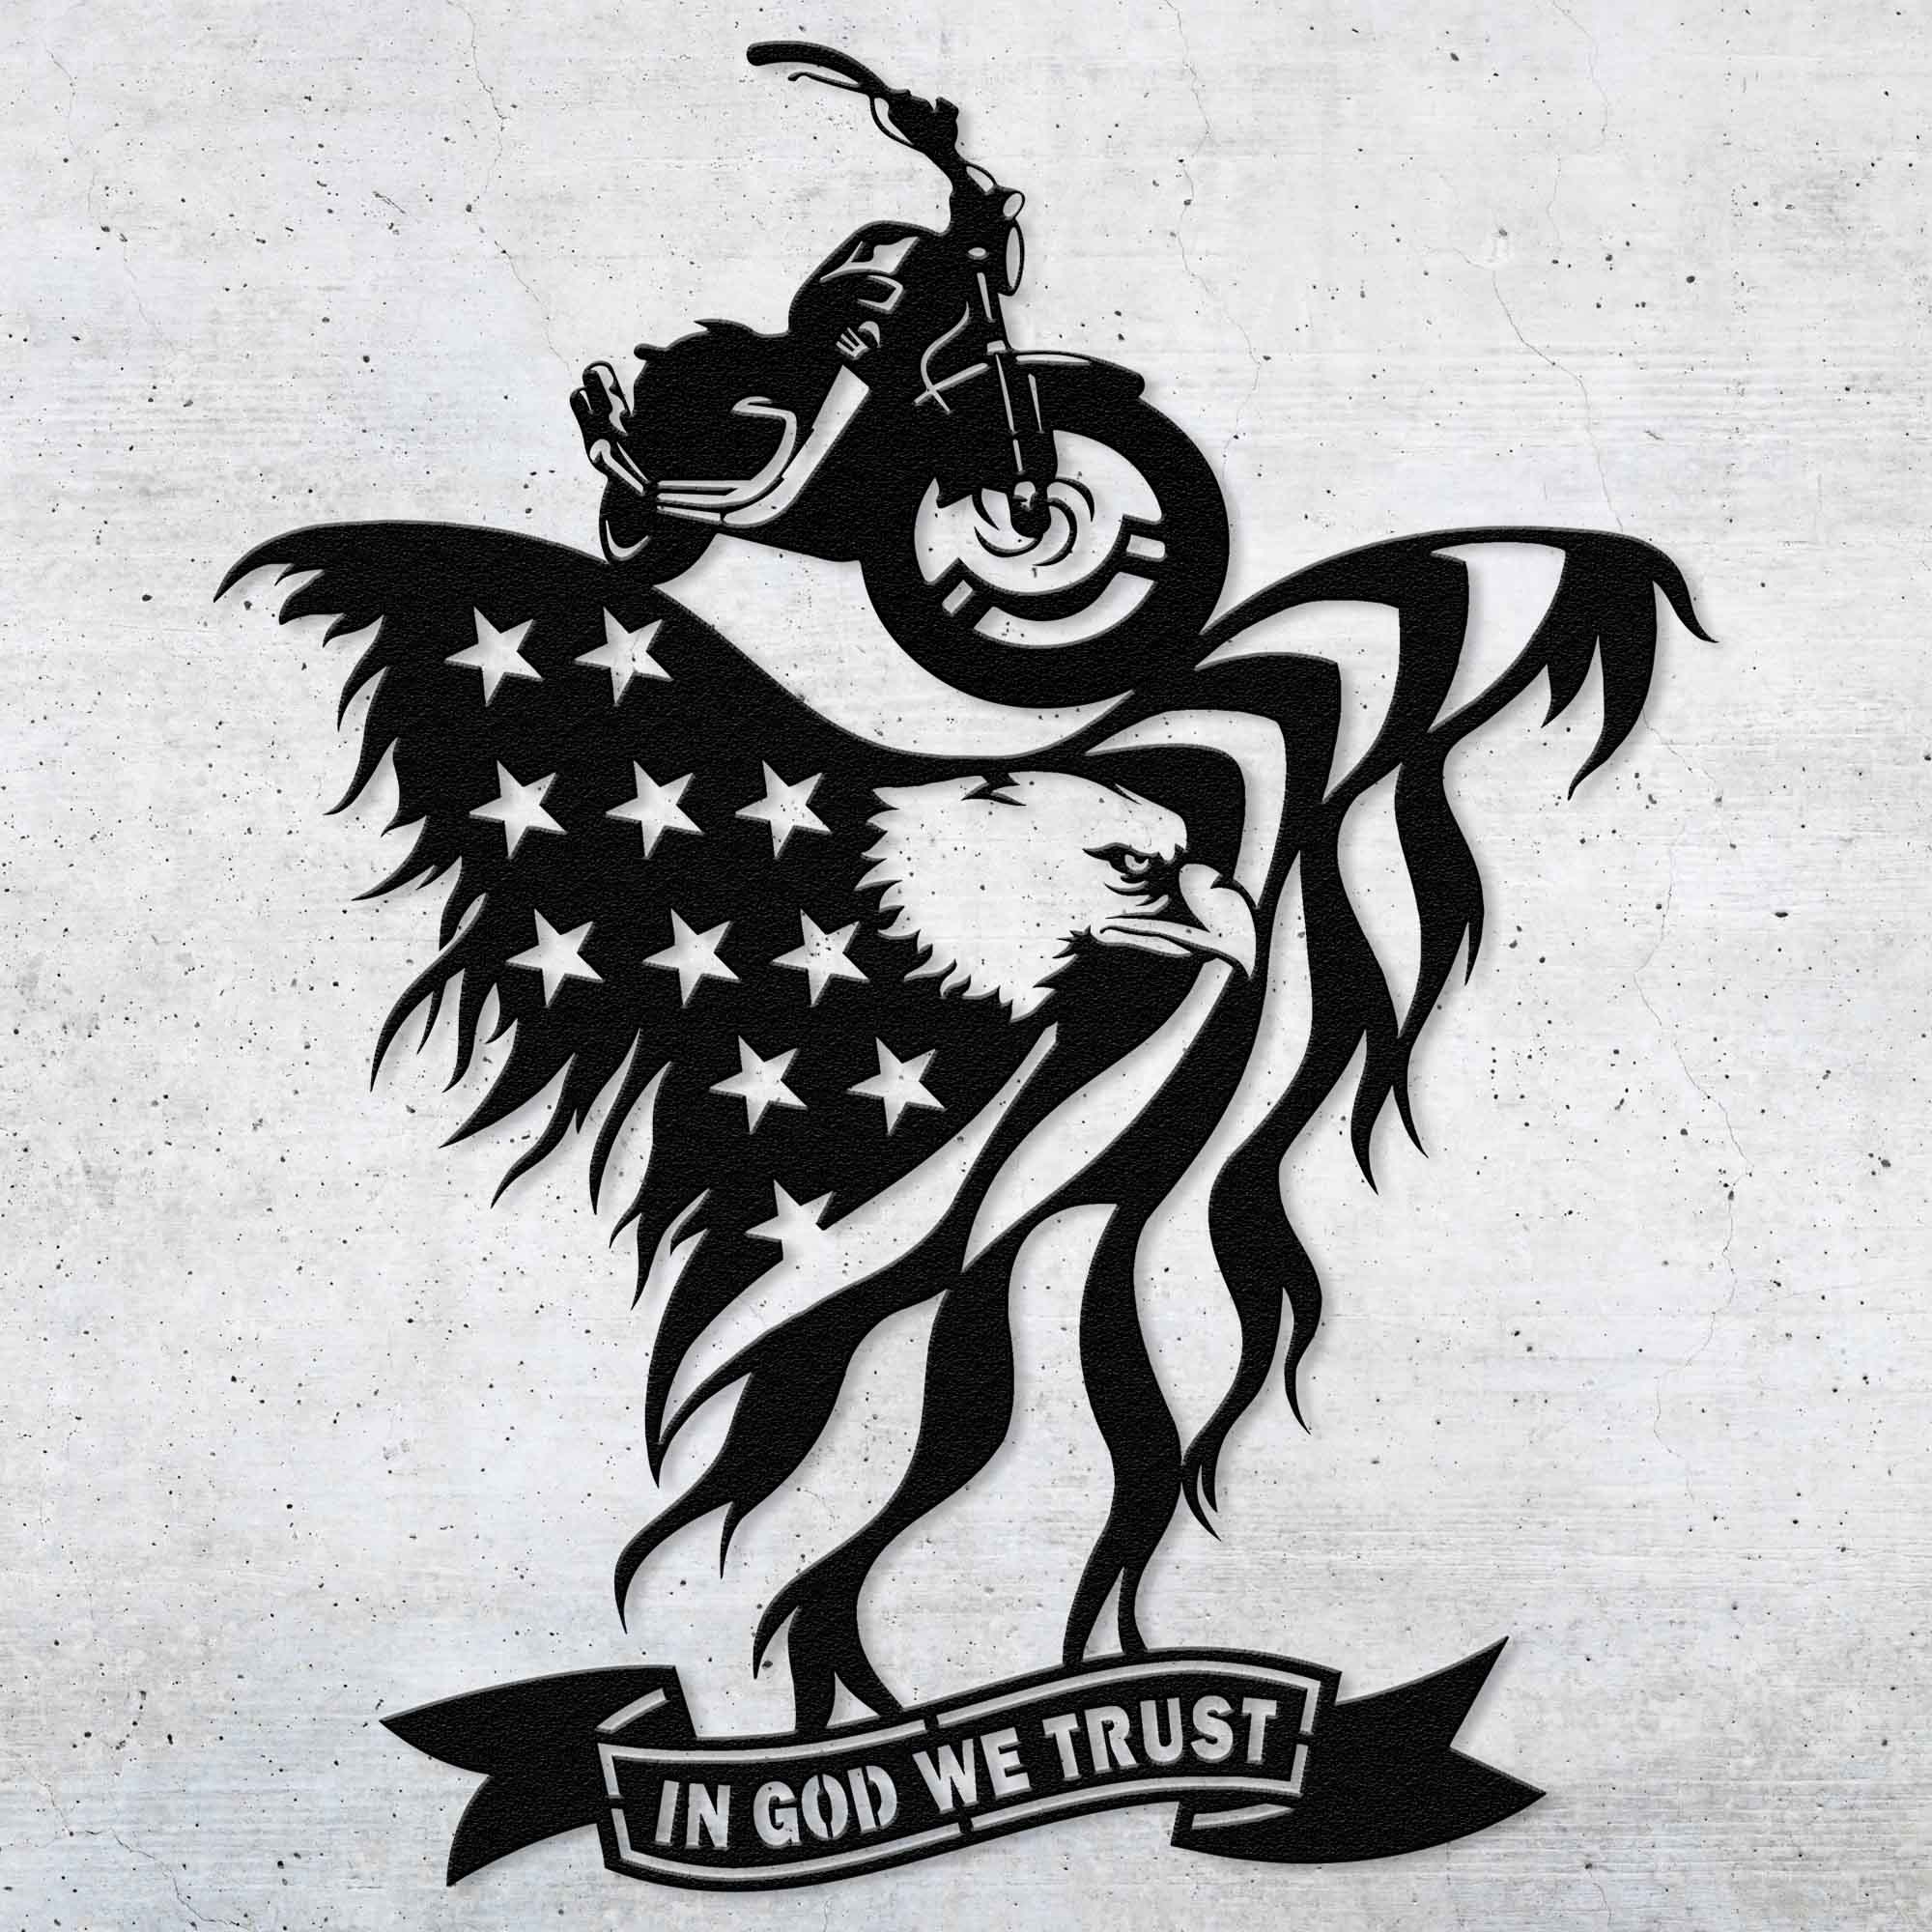 In God We Trust - Biker Edition Metal Art - Throttle Mania